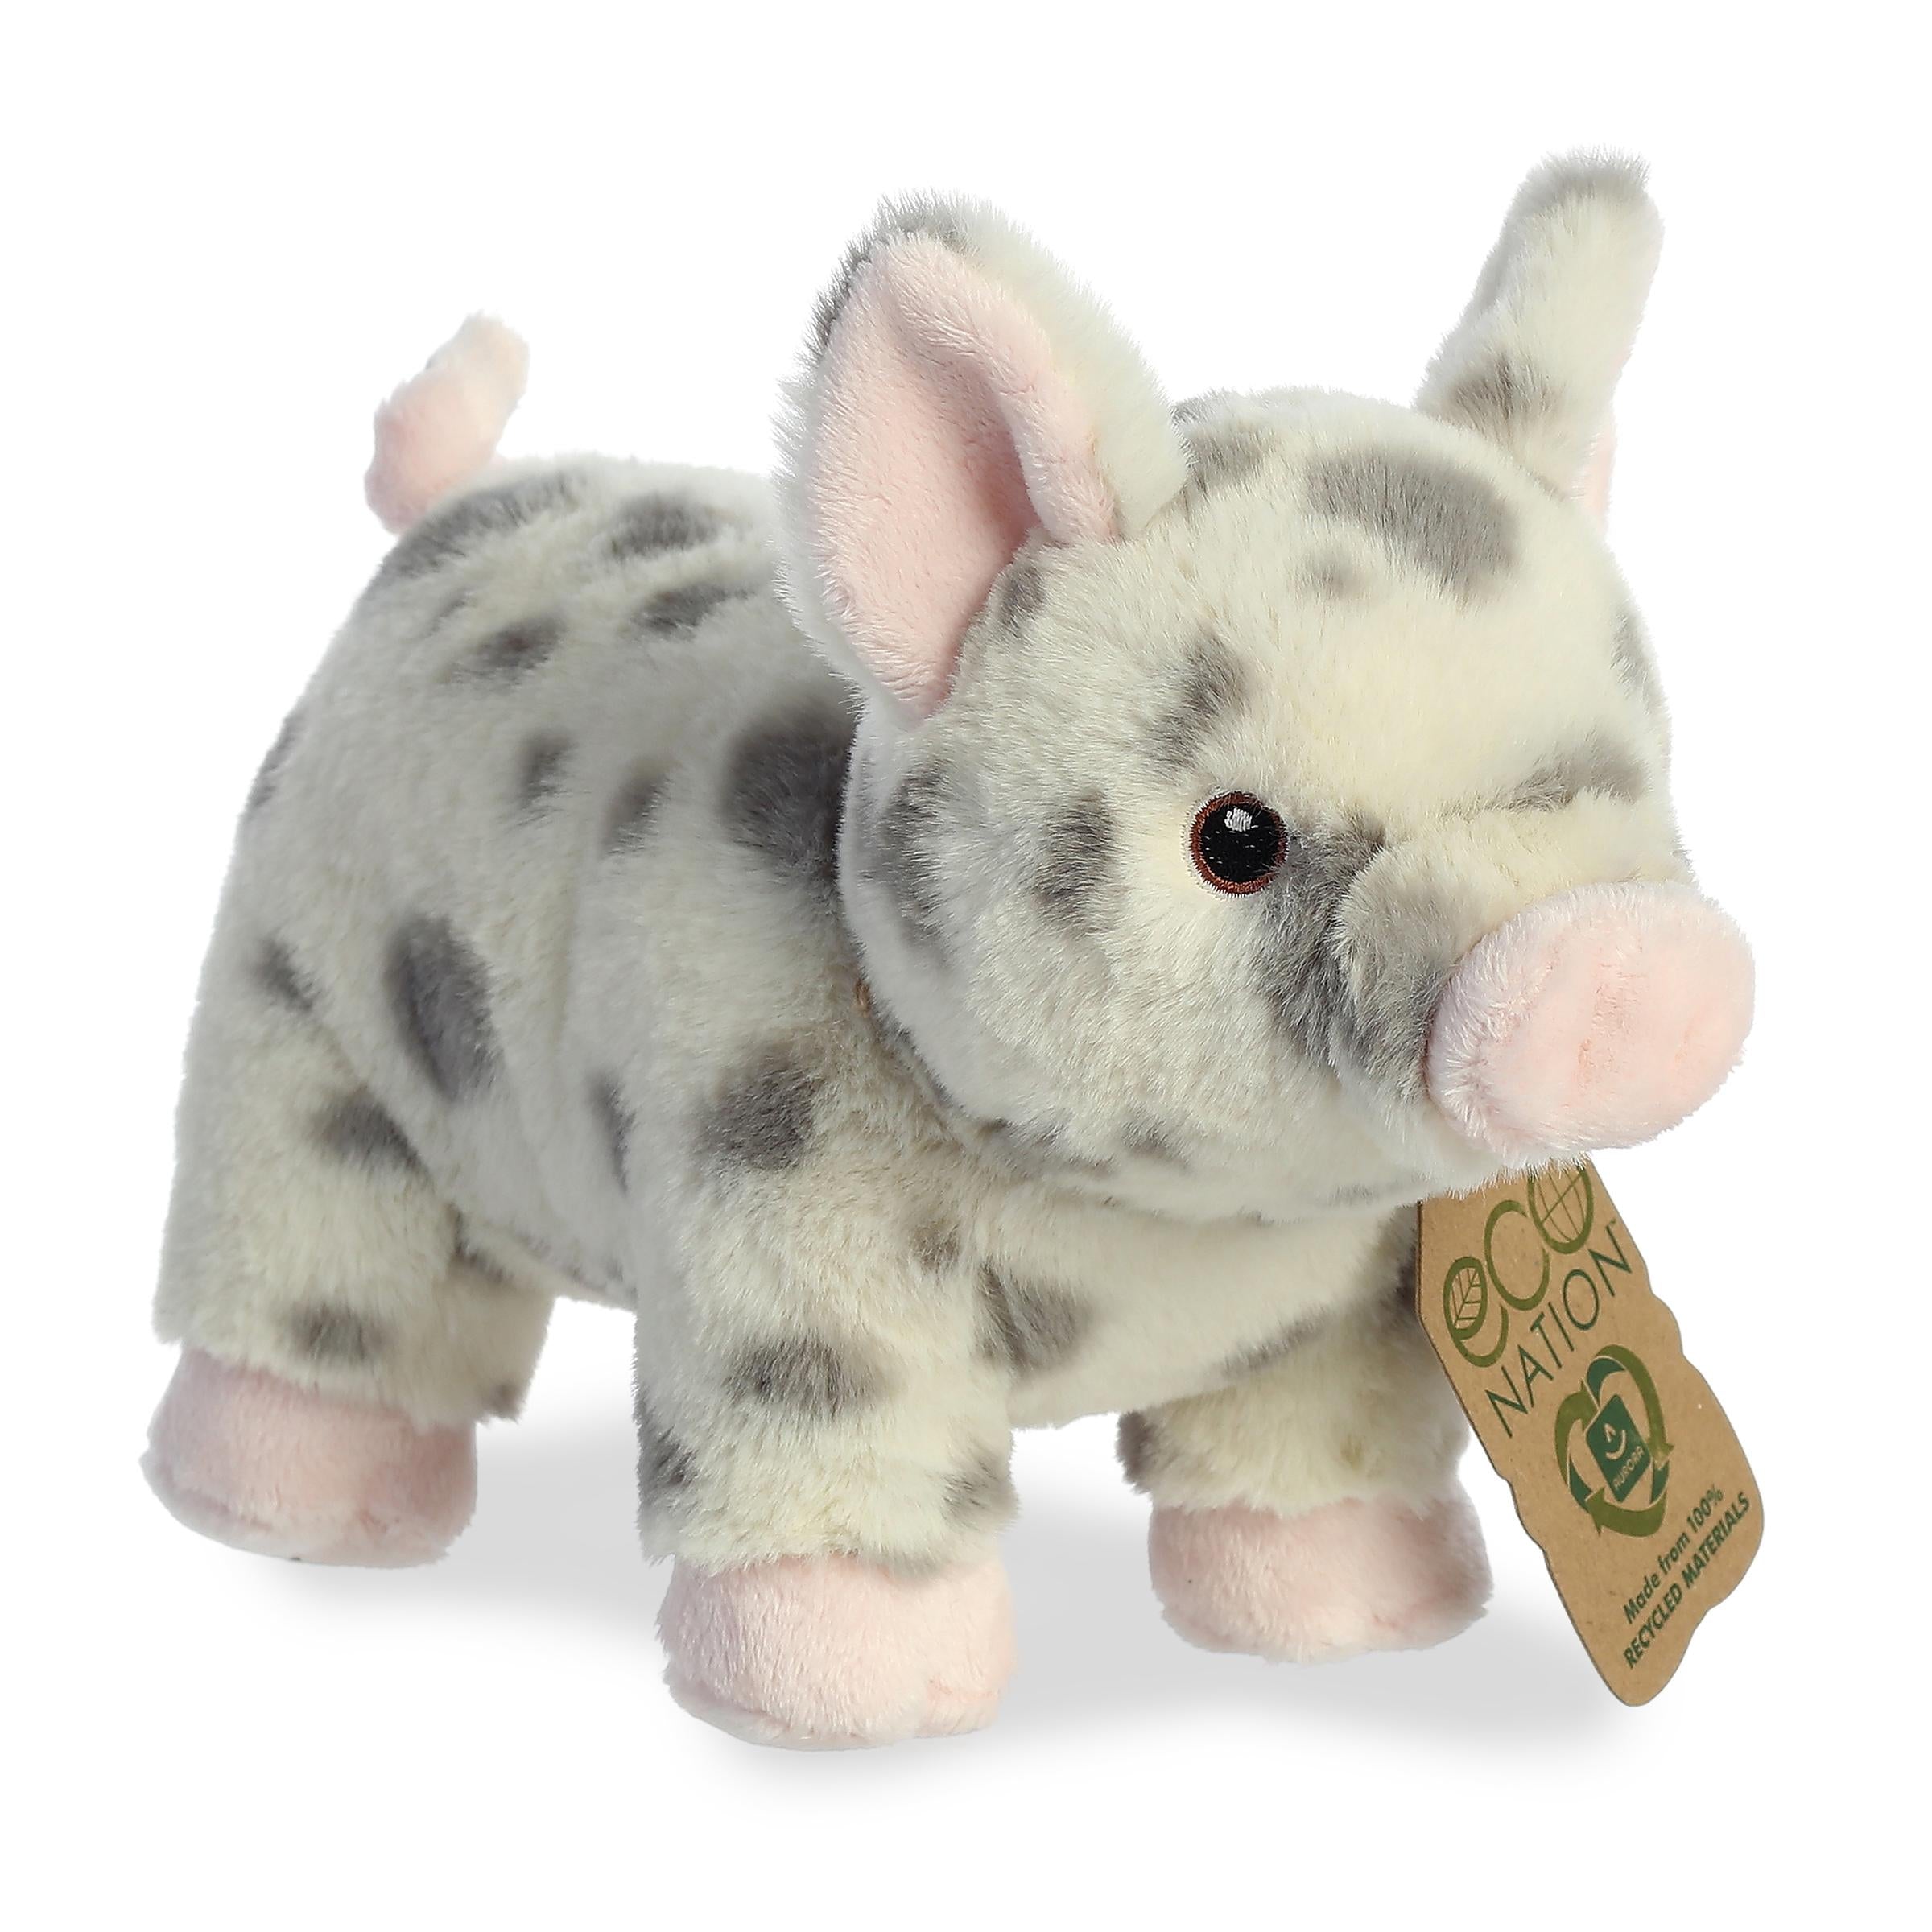 Spotted Pig Ã¢â‚¬â€œ Cuddly Eco-Nation Stuffed Animals Ã¢â‚¬â€œ